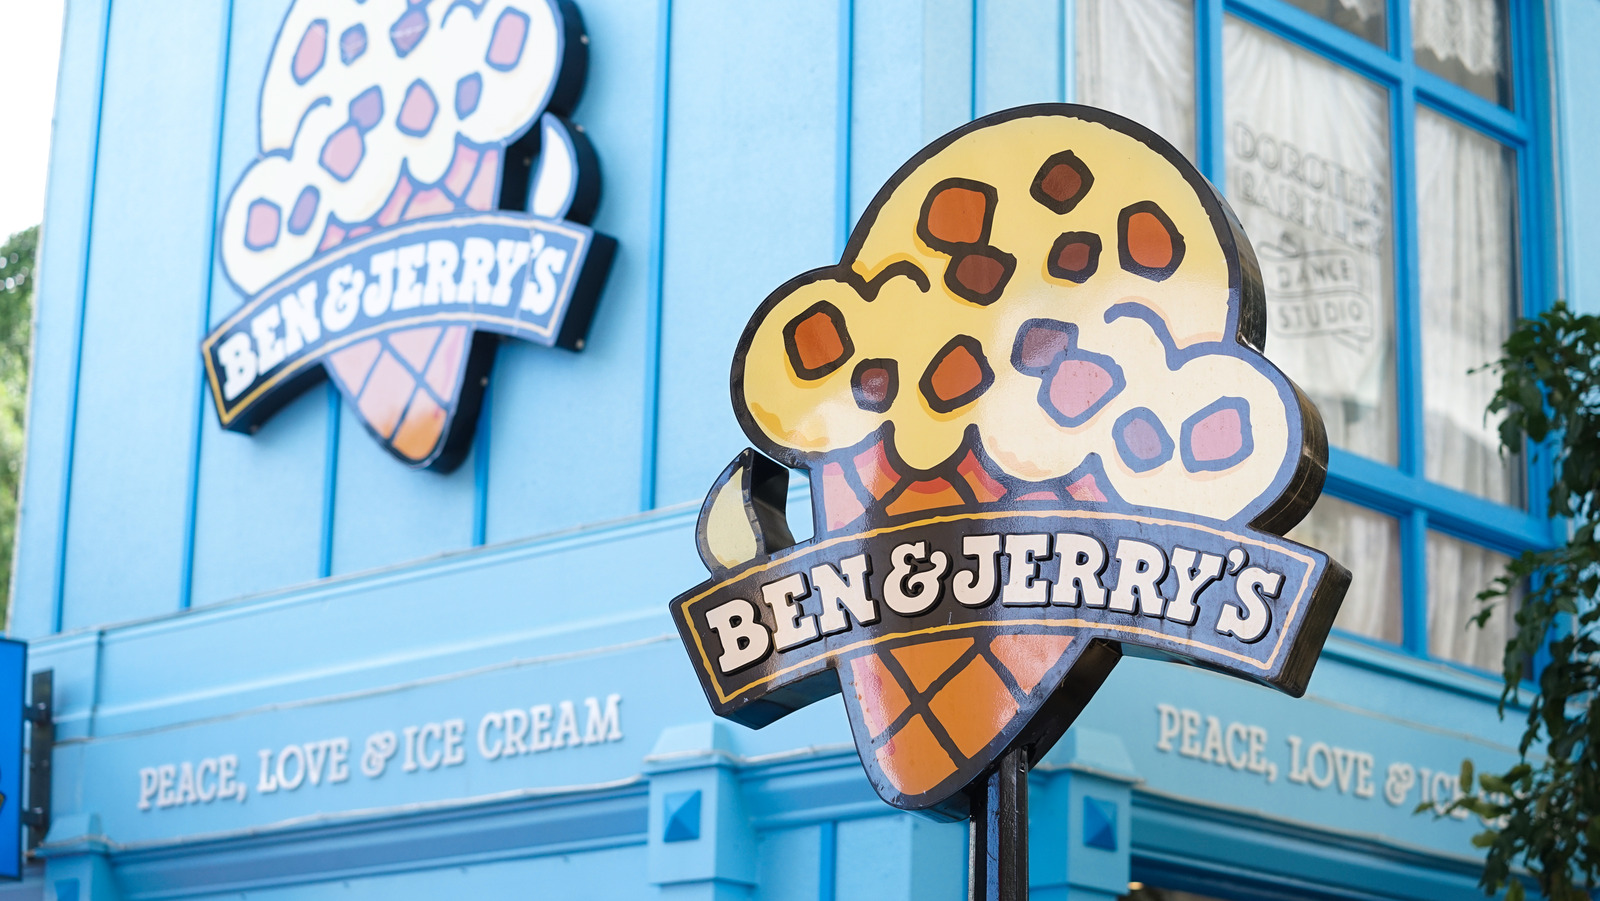 Yes, It's True: Ben & Jerry's Introduces 'Schweddy Balls' Ice Cream Flavor  : The Two-Way : NPR